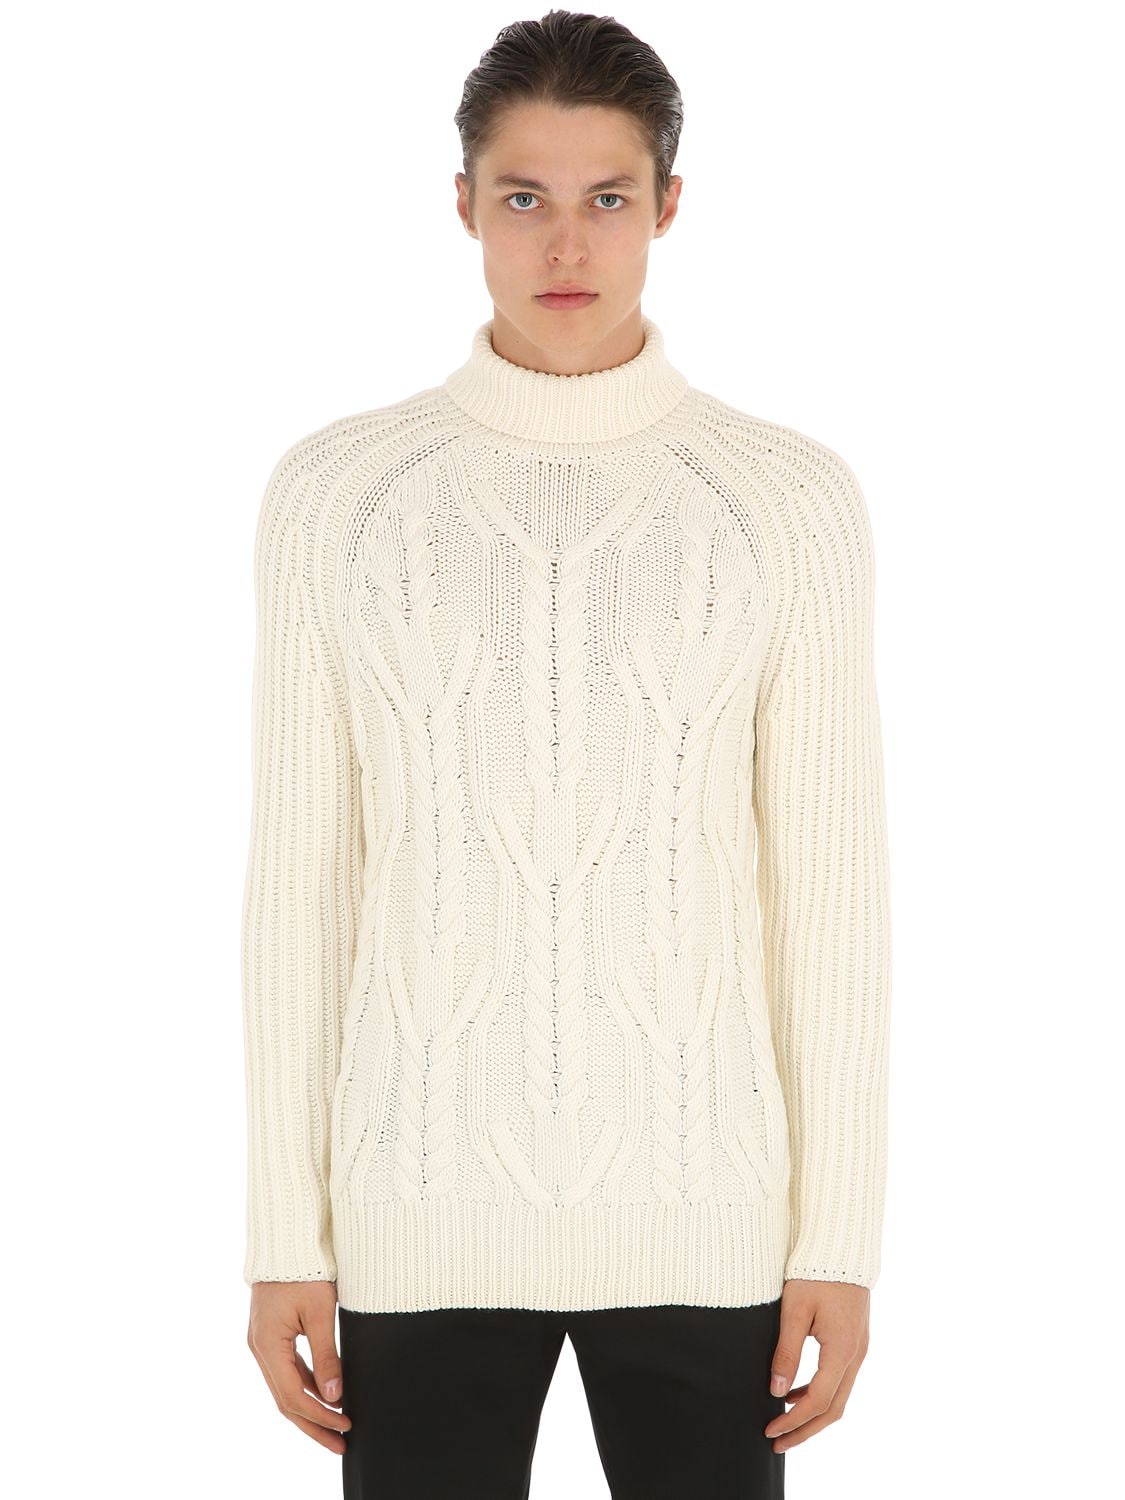 NEIL BARRETT 羊毛高领针织衫,68I05I023-MjE0OA2